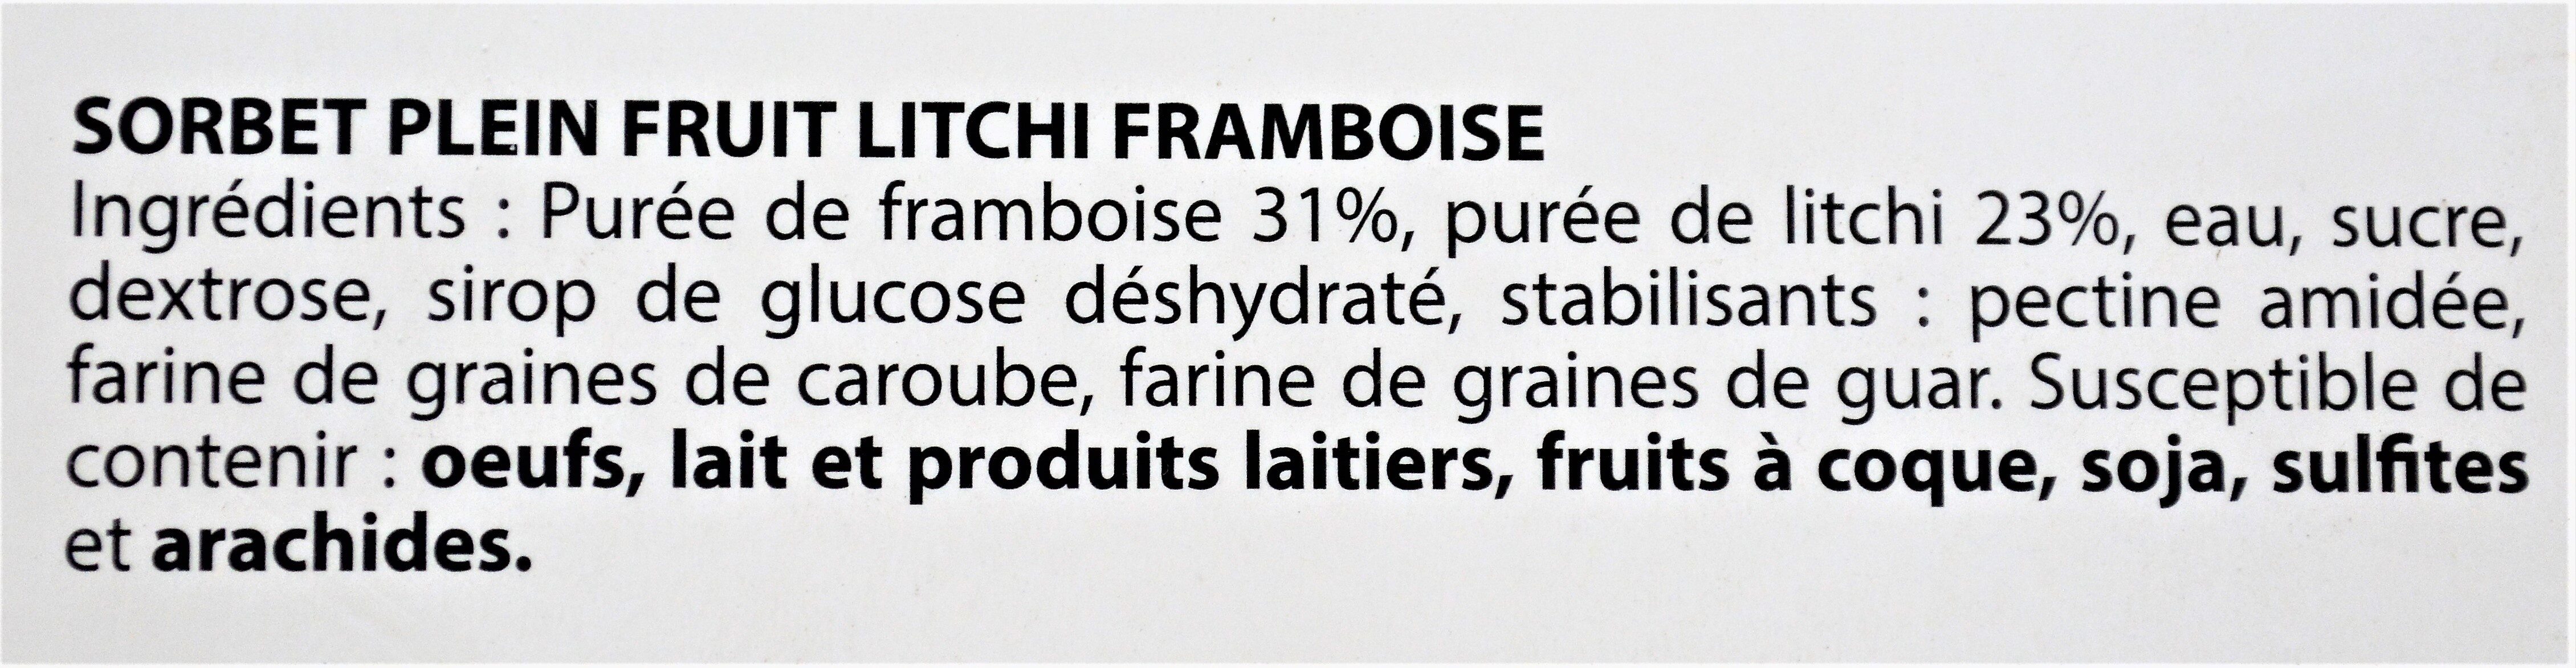 Sorbet plein fruit litchi framboise - Ingredientes - fr